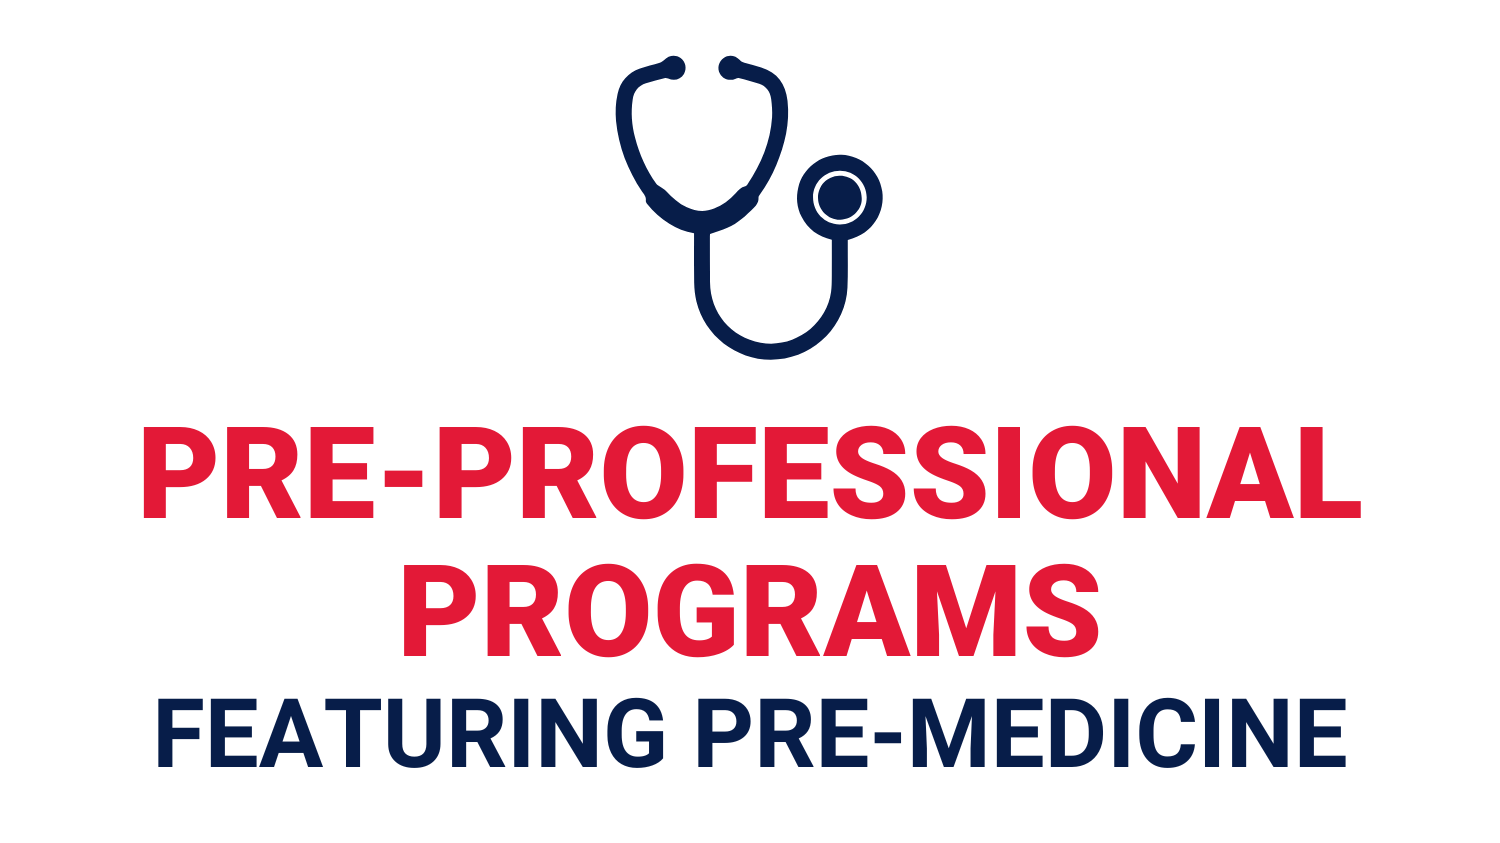 Offering pre-professional programs featuring pre-medicine.